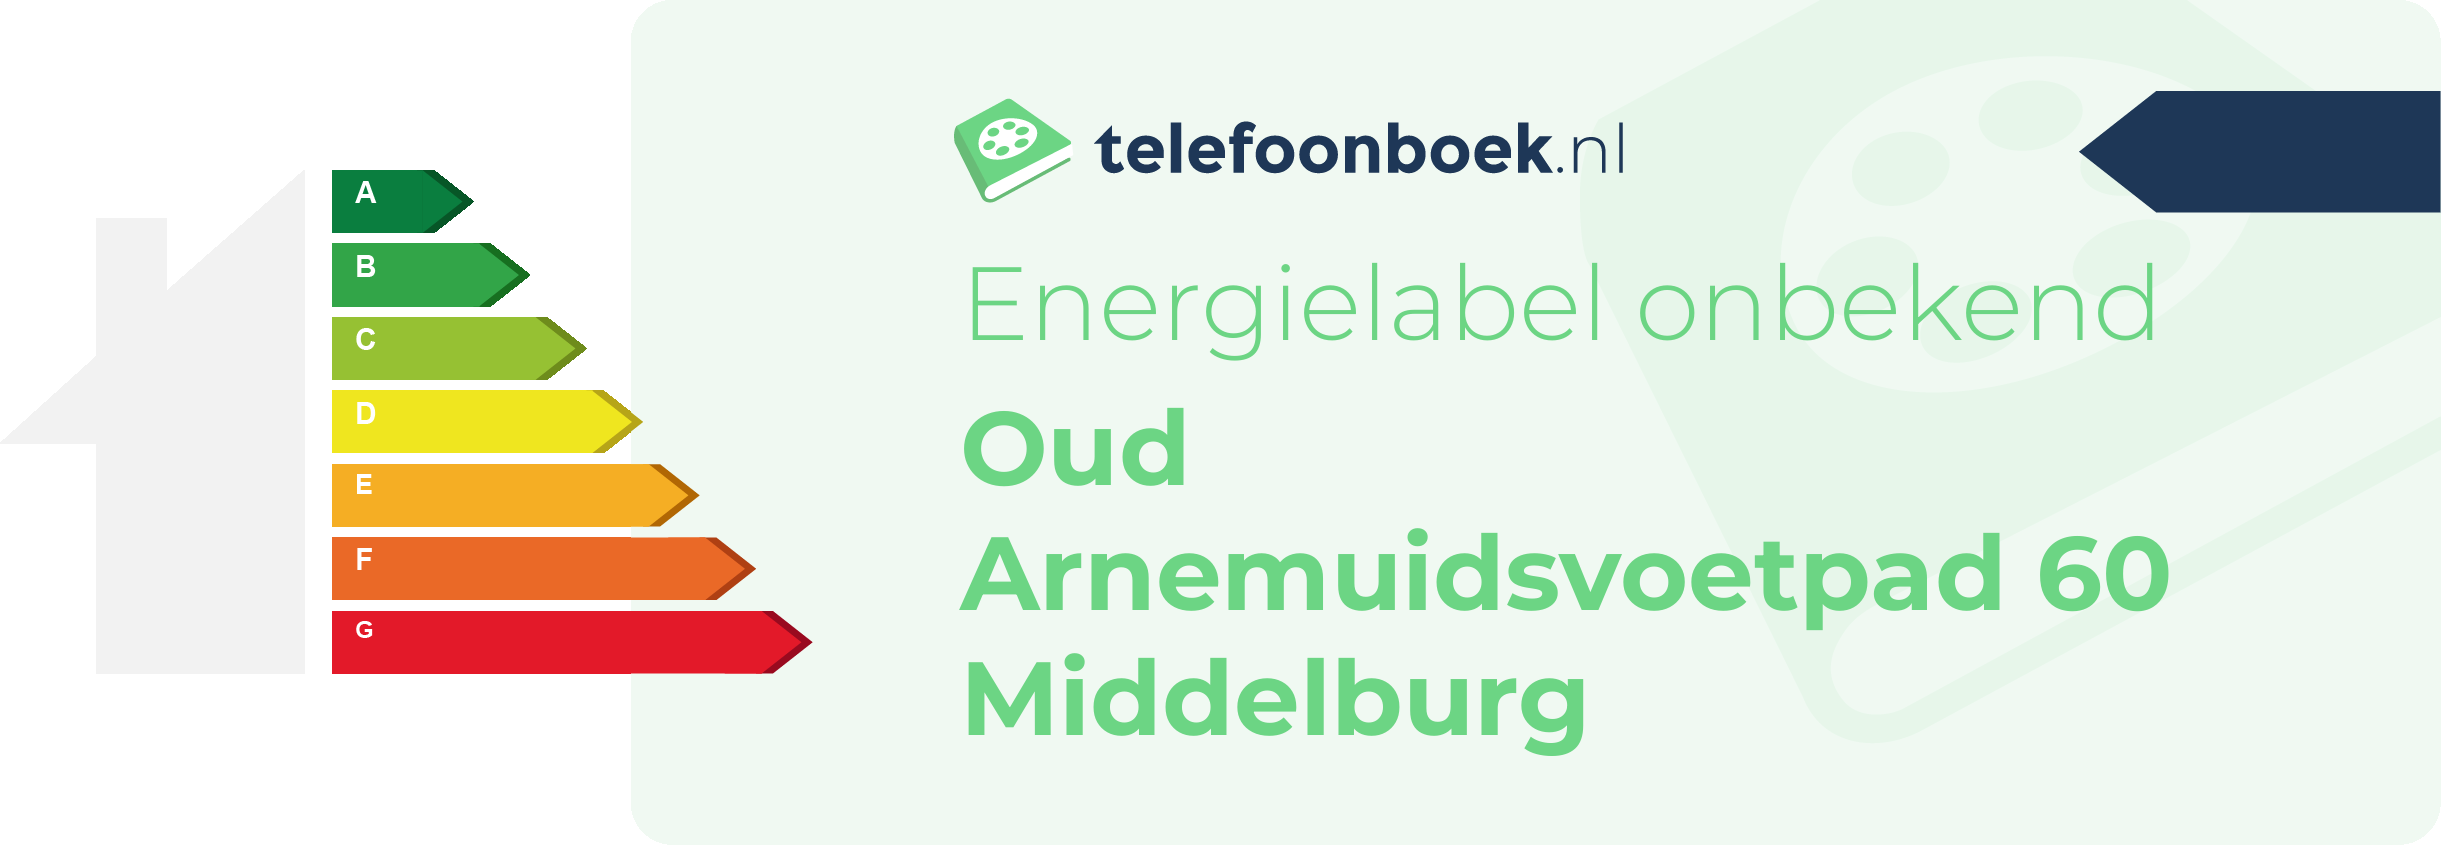 Energielabel Oud Arnemuidsvoetpad 60 Middelburg